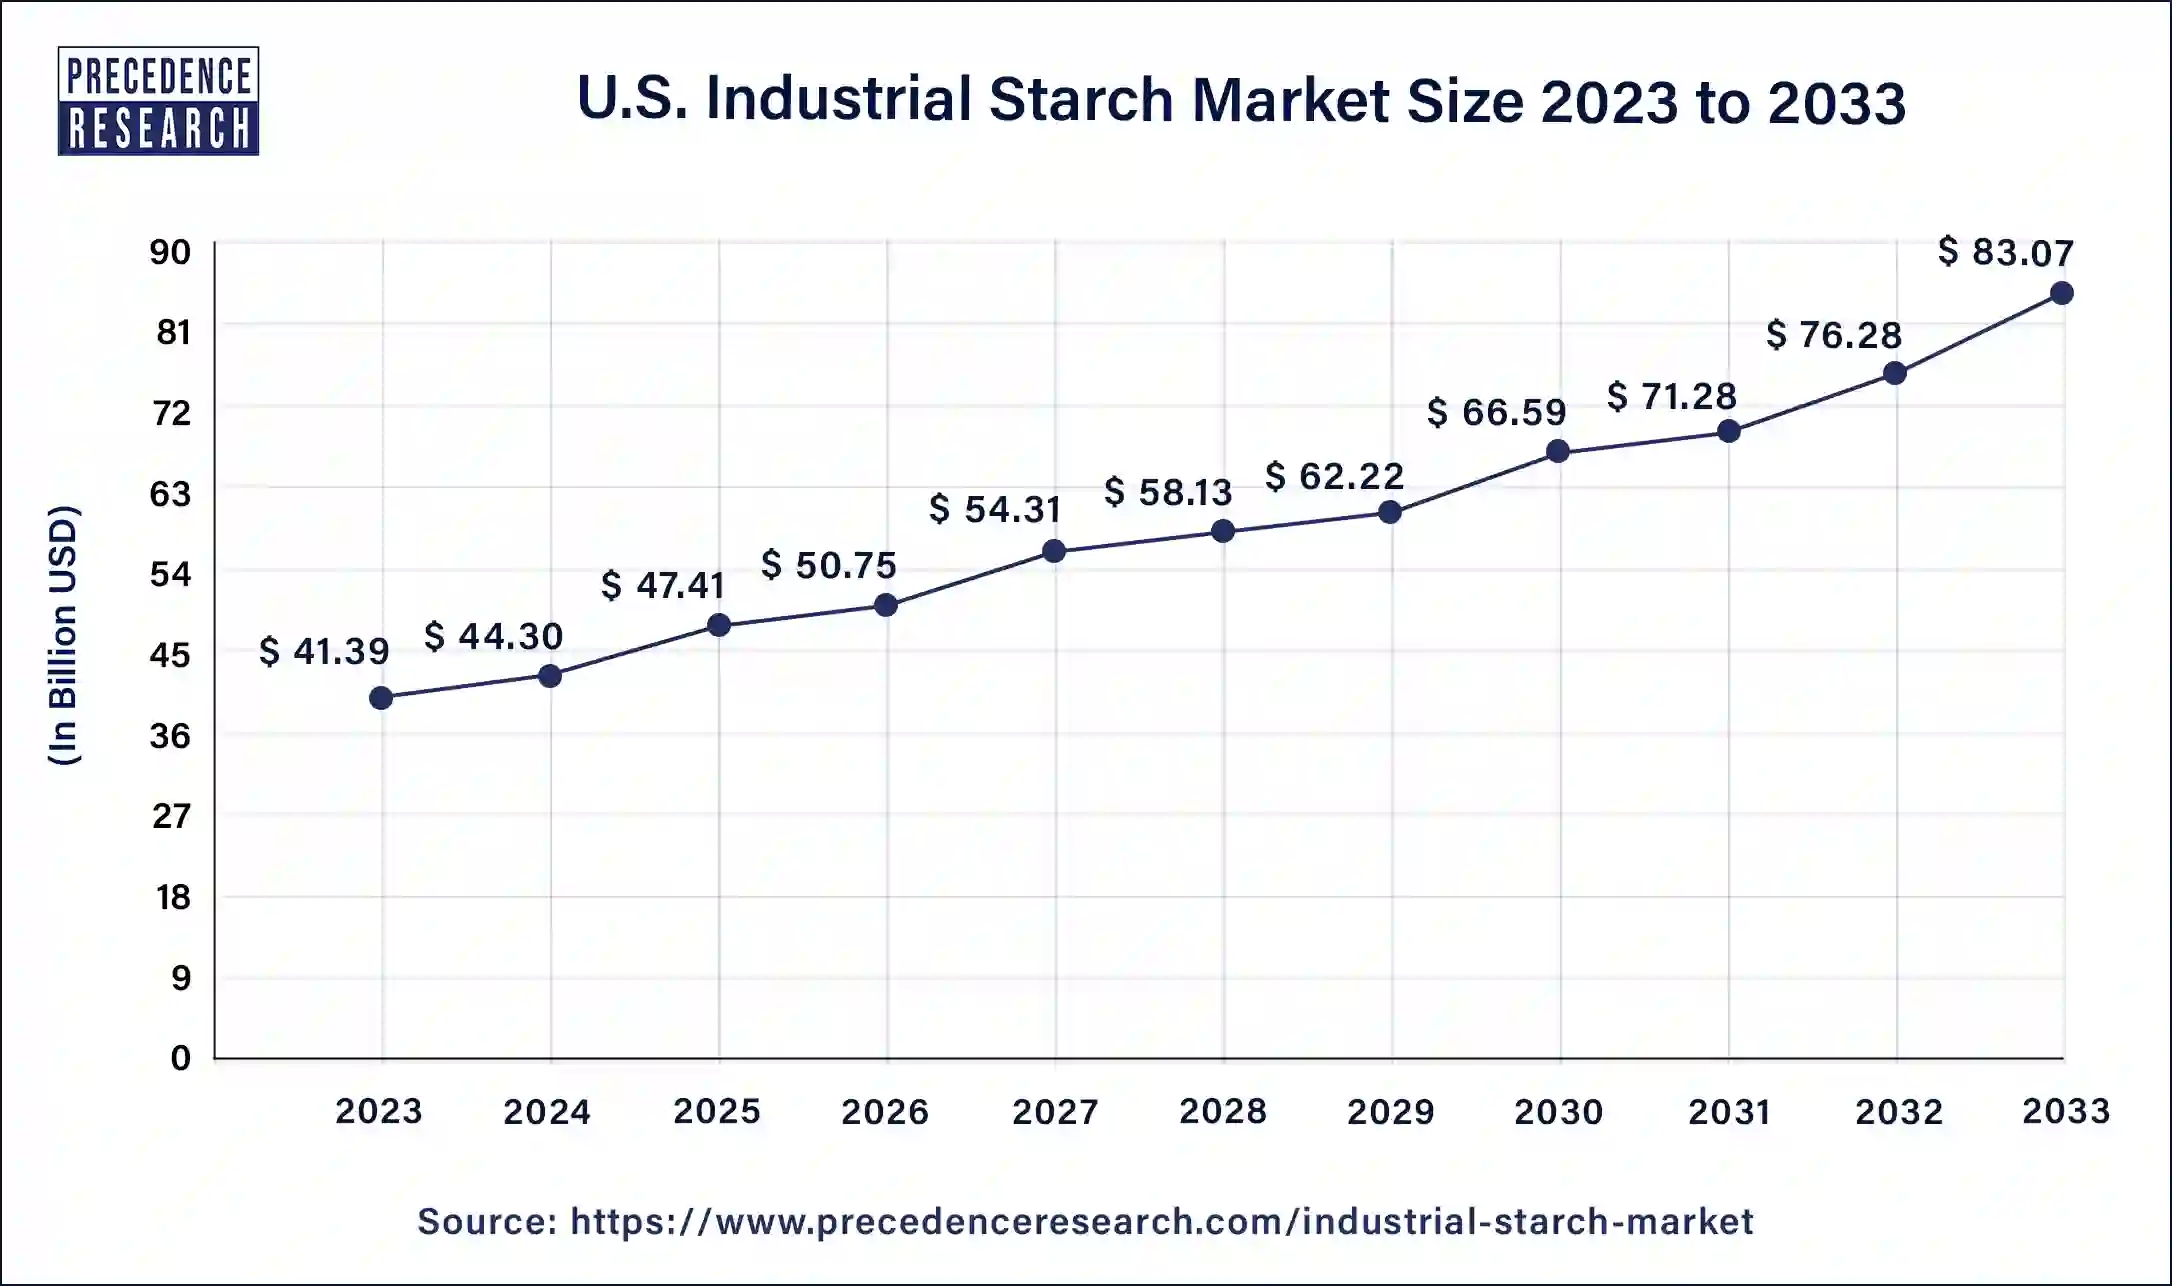 U.S. Industrial Starch Market Size 2024 to 2033